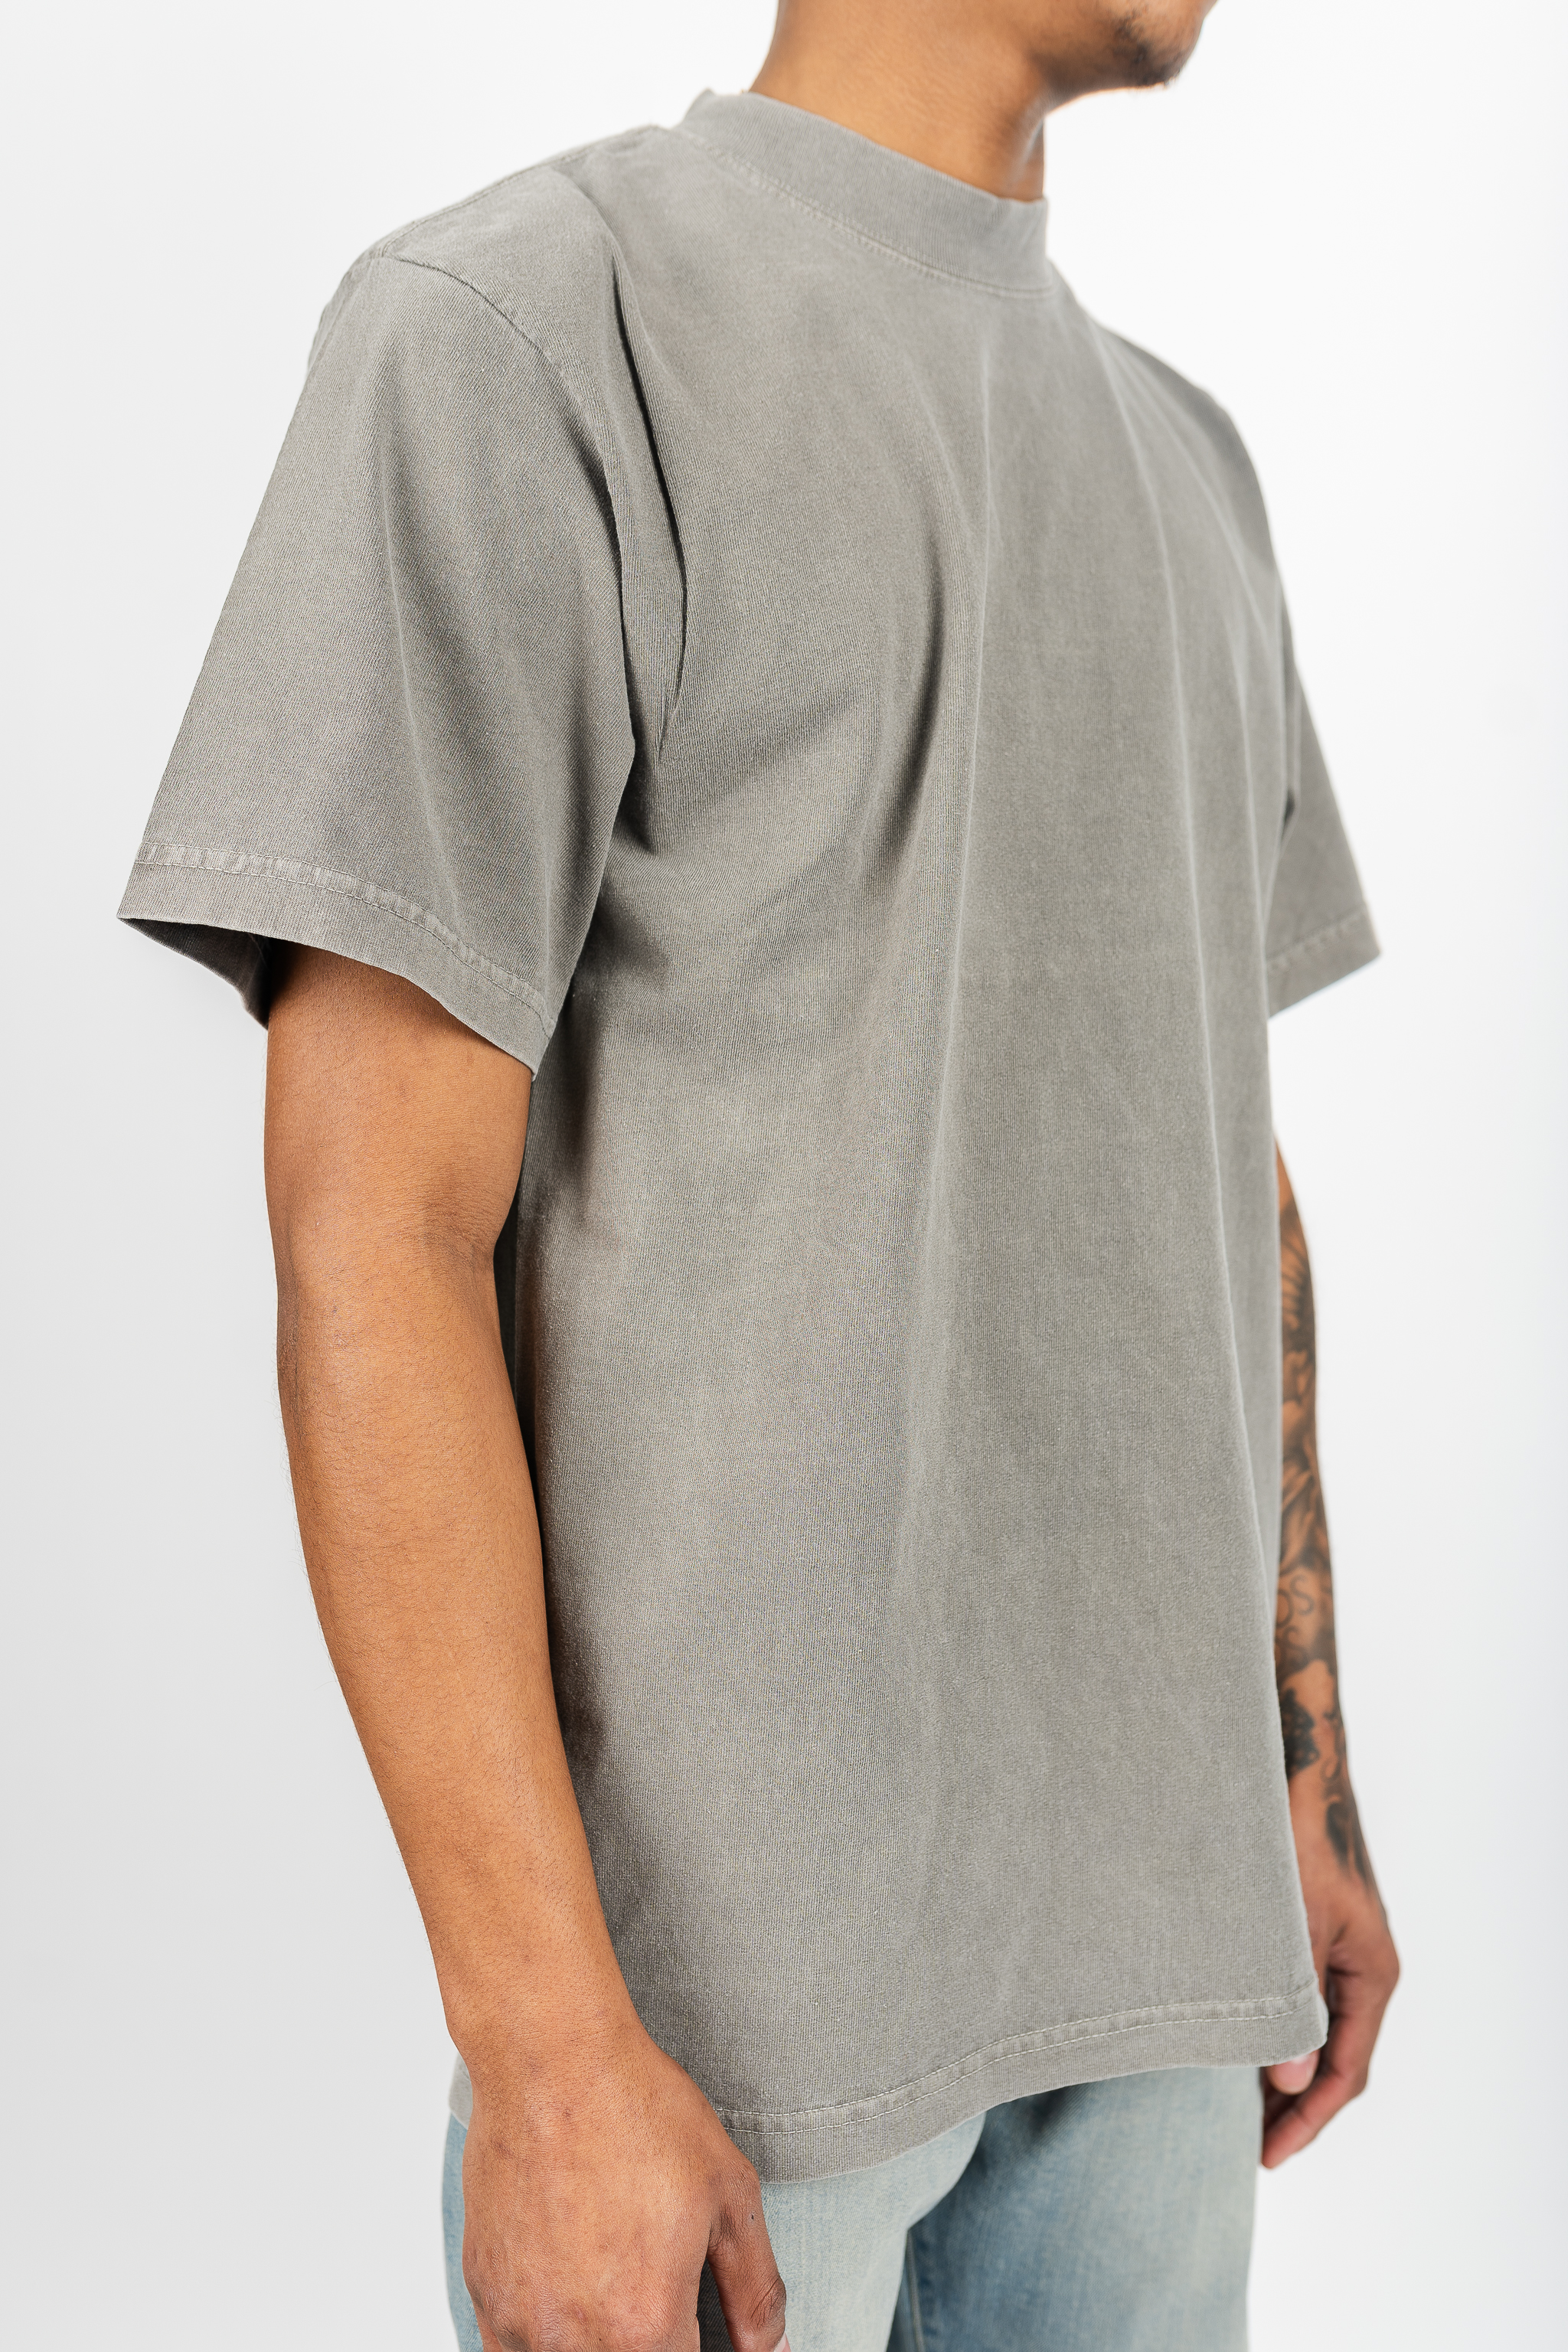 Shaka Wear Garment Dye Cream Long Sleeve HeavyweightT-Shirt